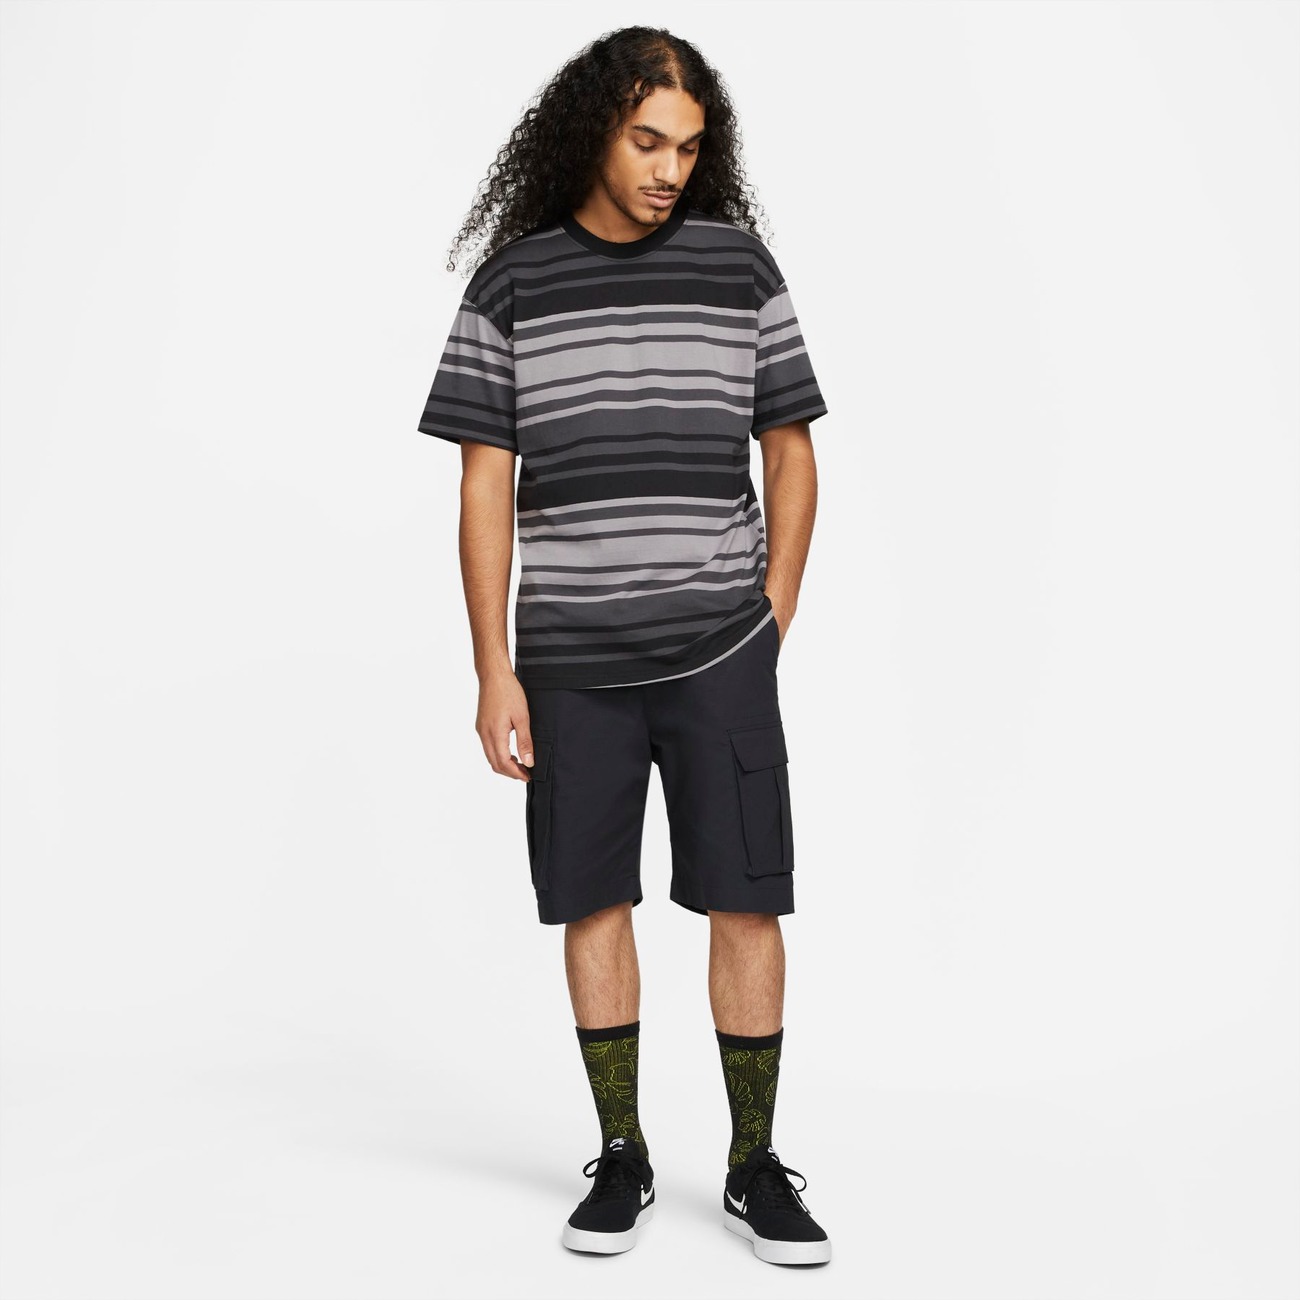 Camiseta Nike SB Masculina - Foto 5